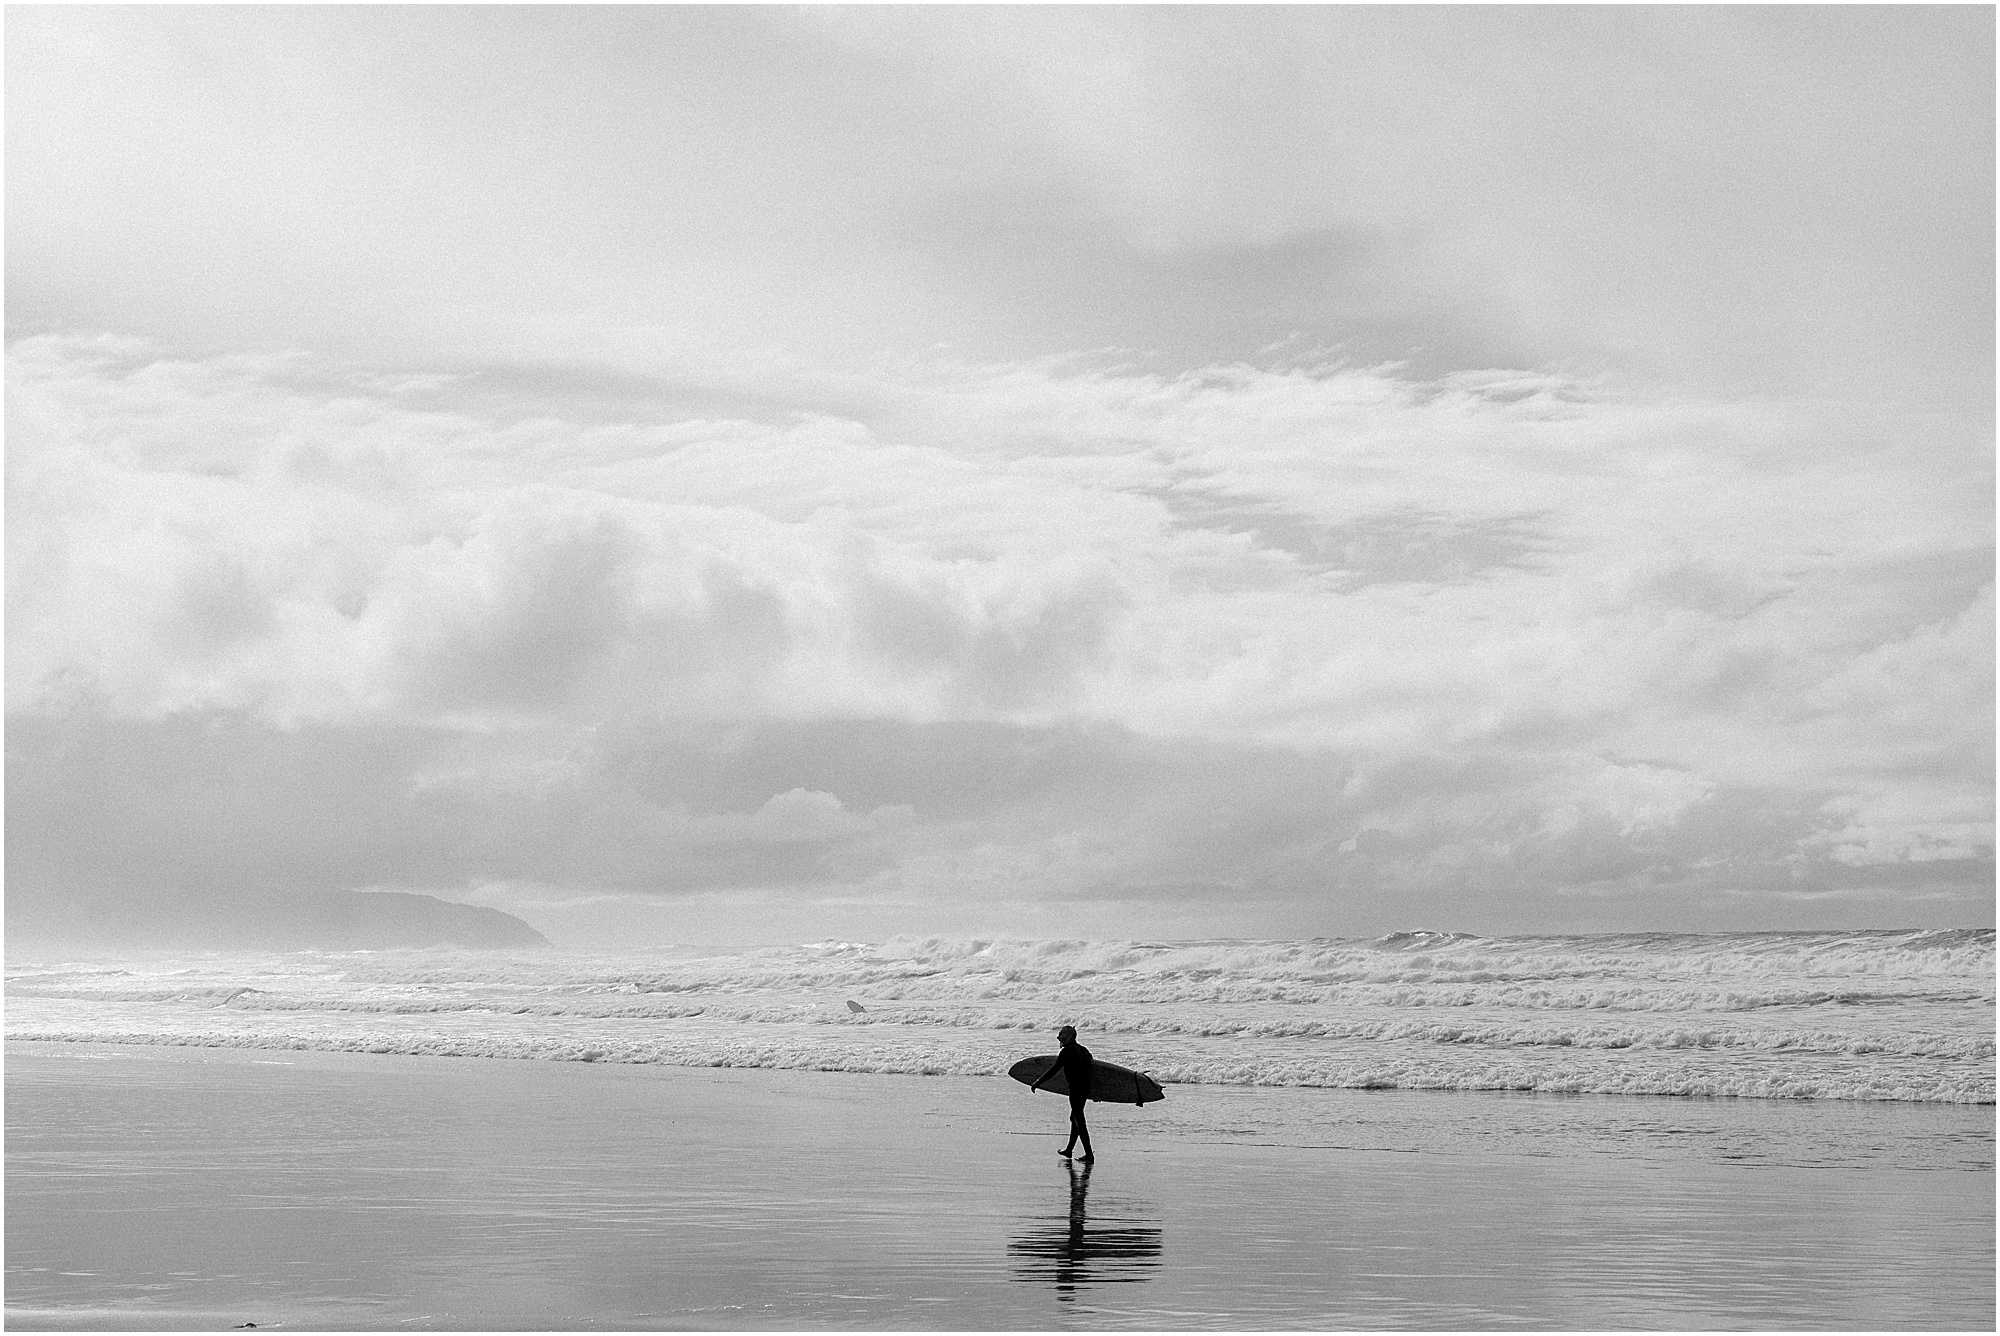 Cape Kiwanda surfer walking on the beach